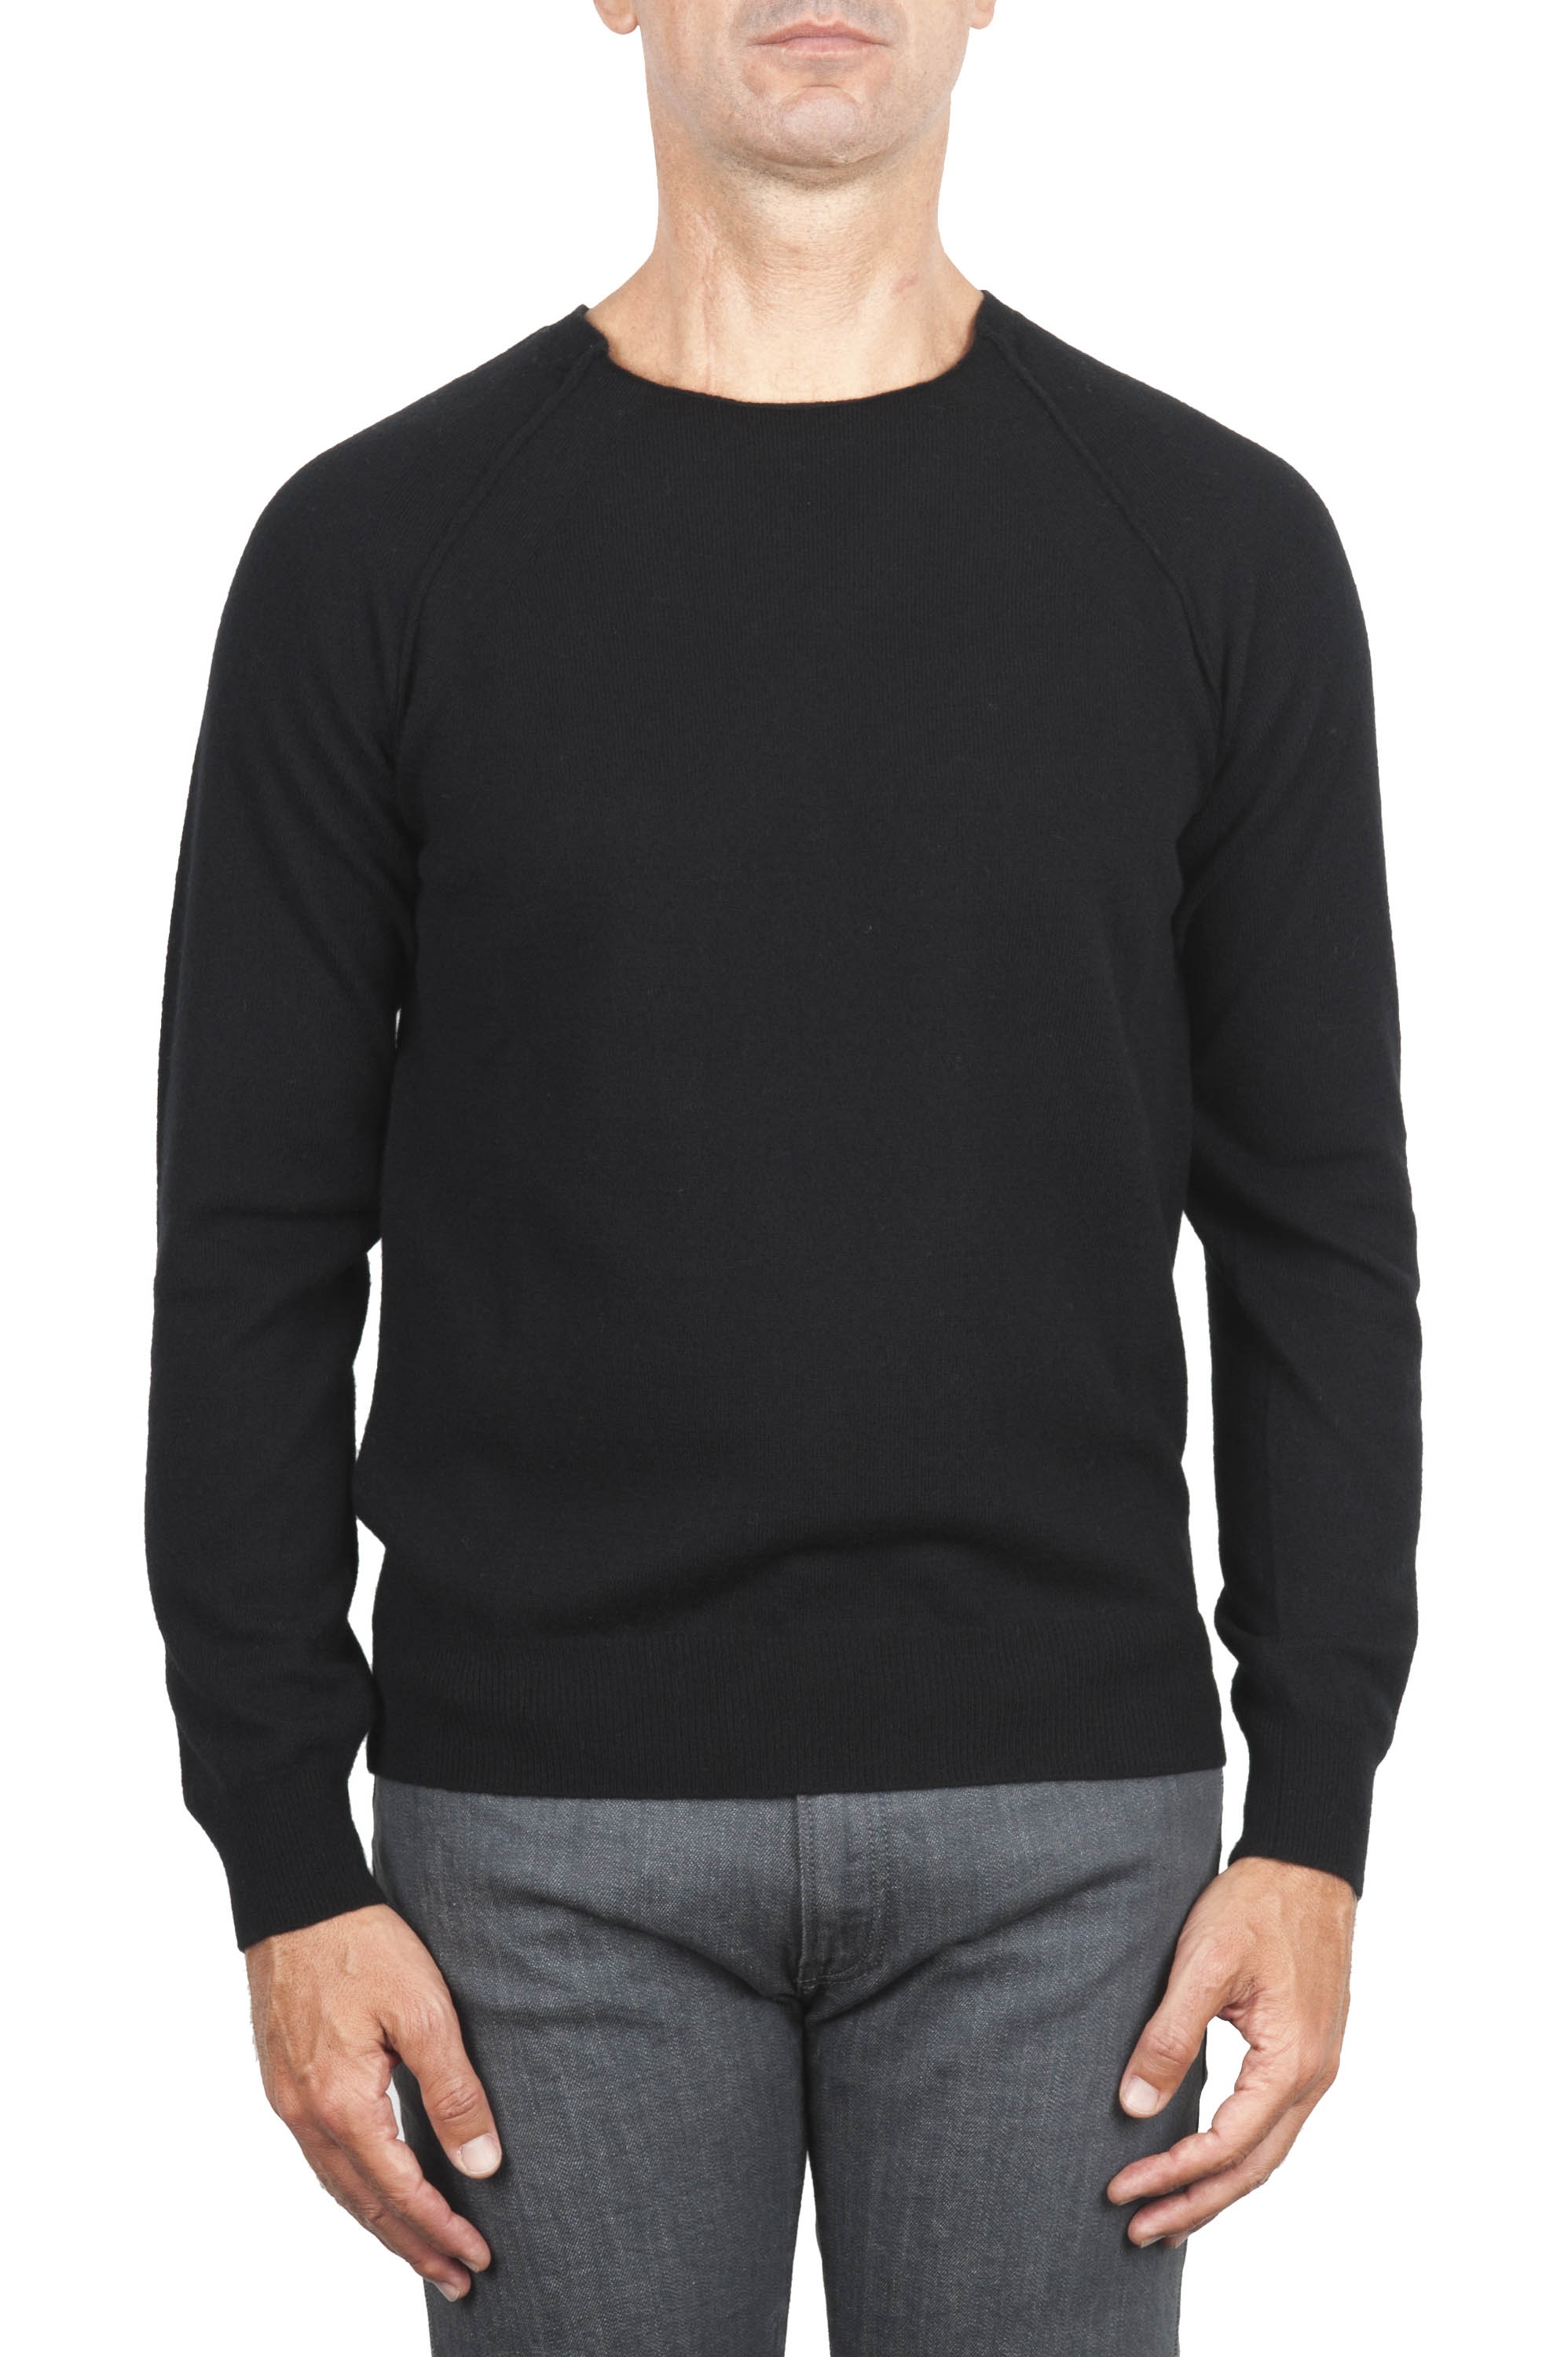 SBU 01496 Black round neck raw cut neckline and raglan sleeve sweater 01